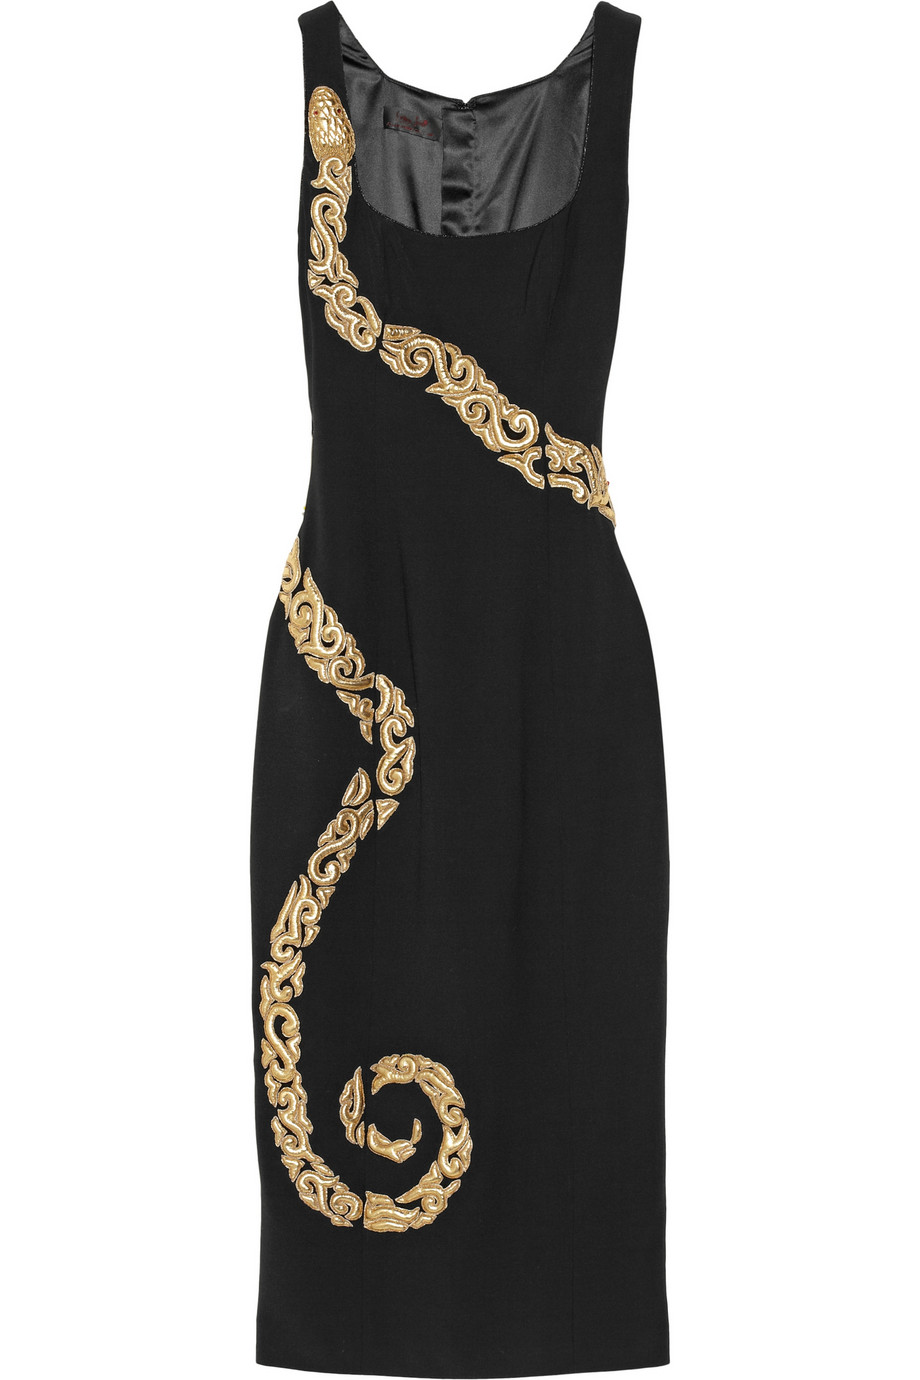 L'wren scott Snake Appliquéd Crepe Dress in Black | Lyst